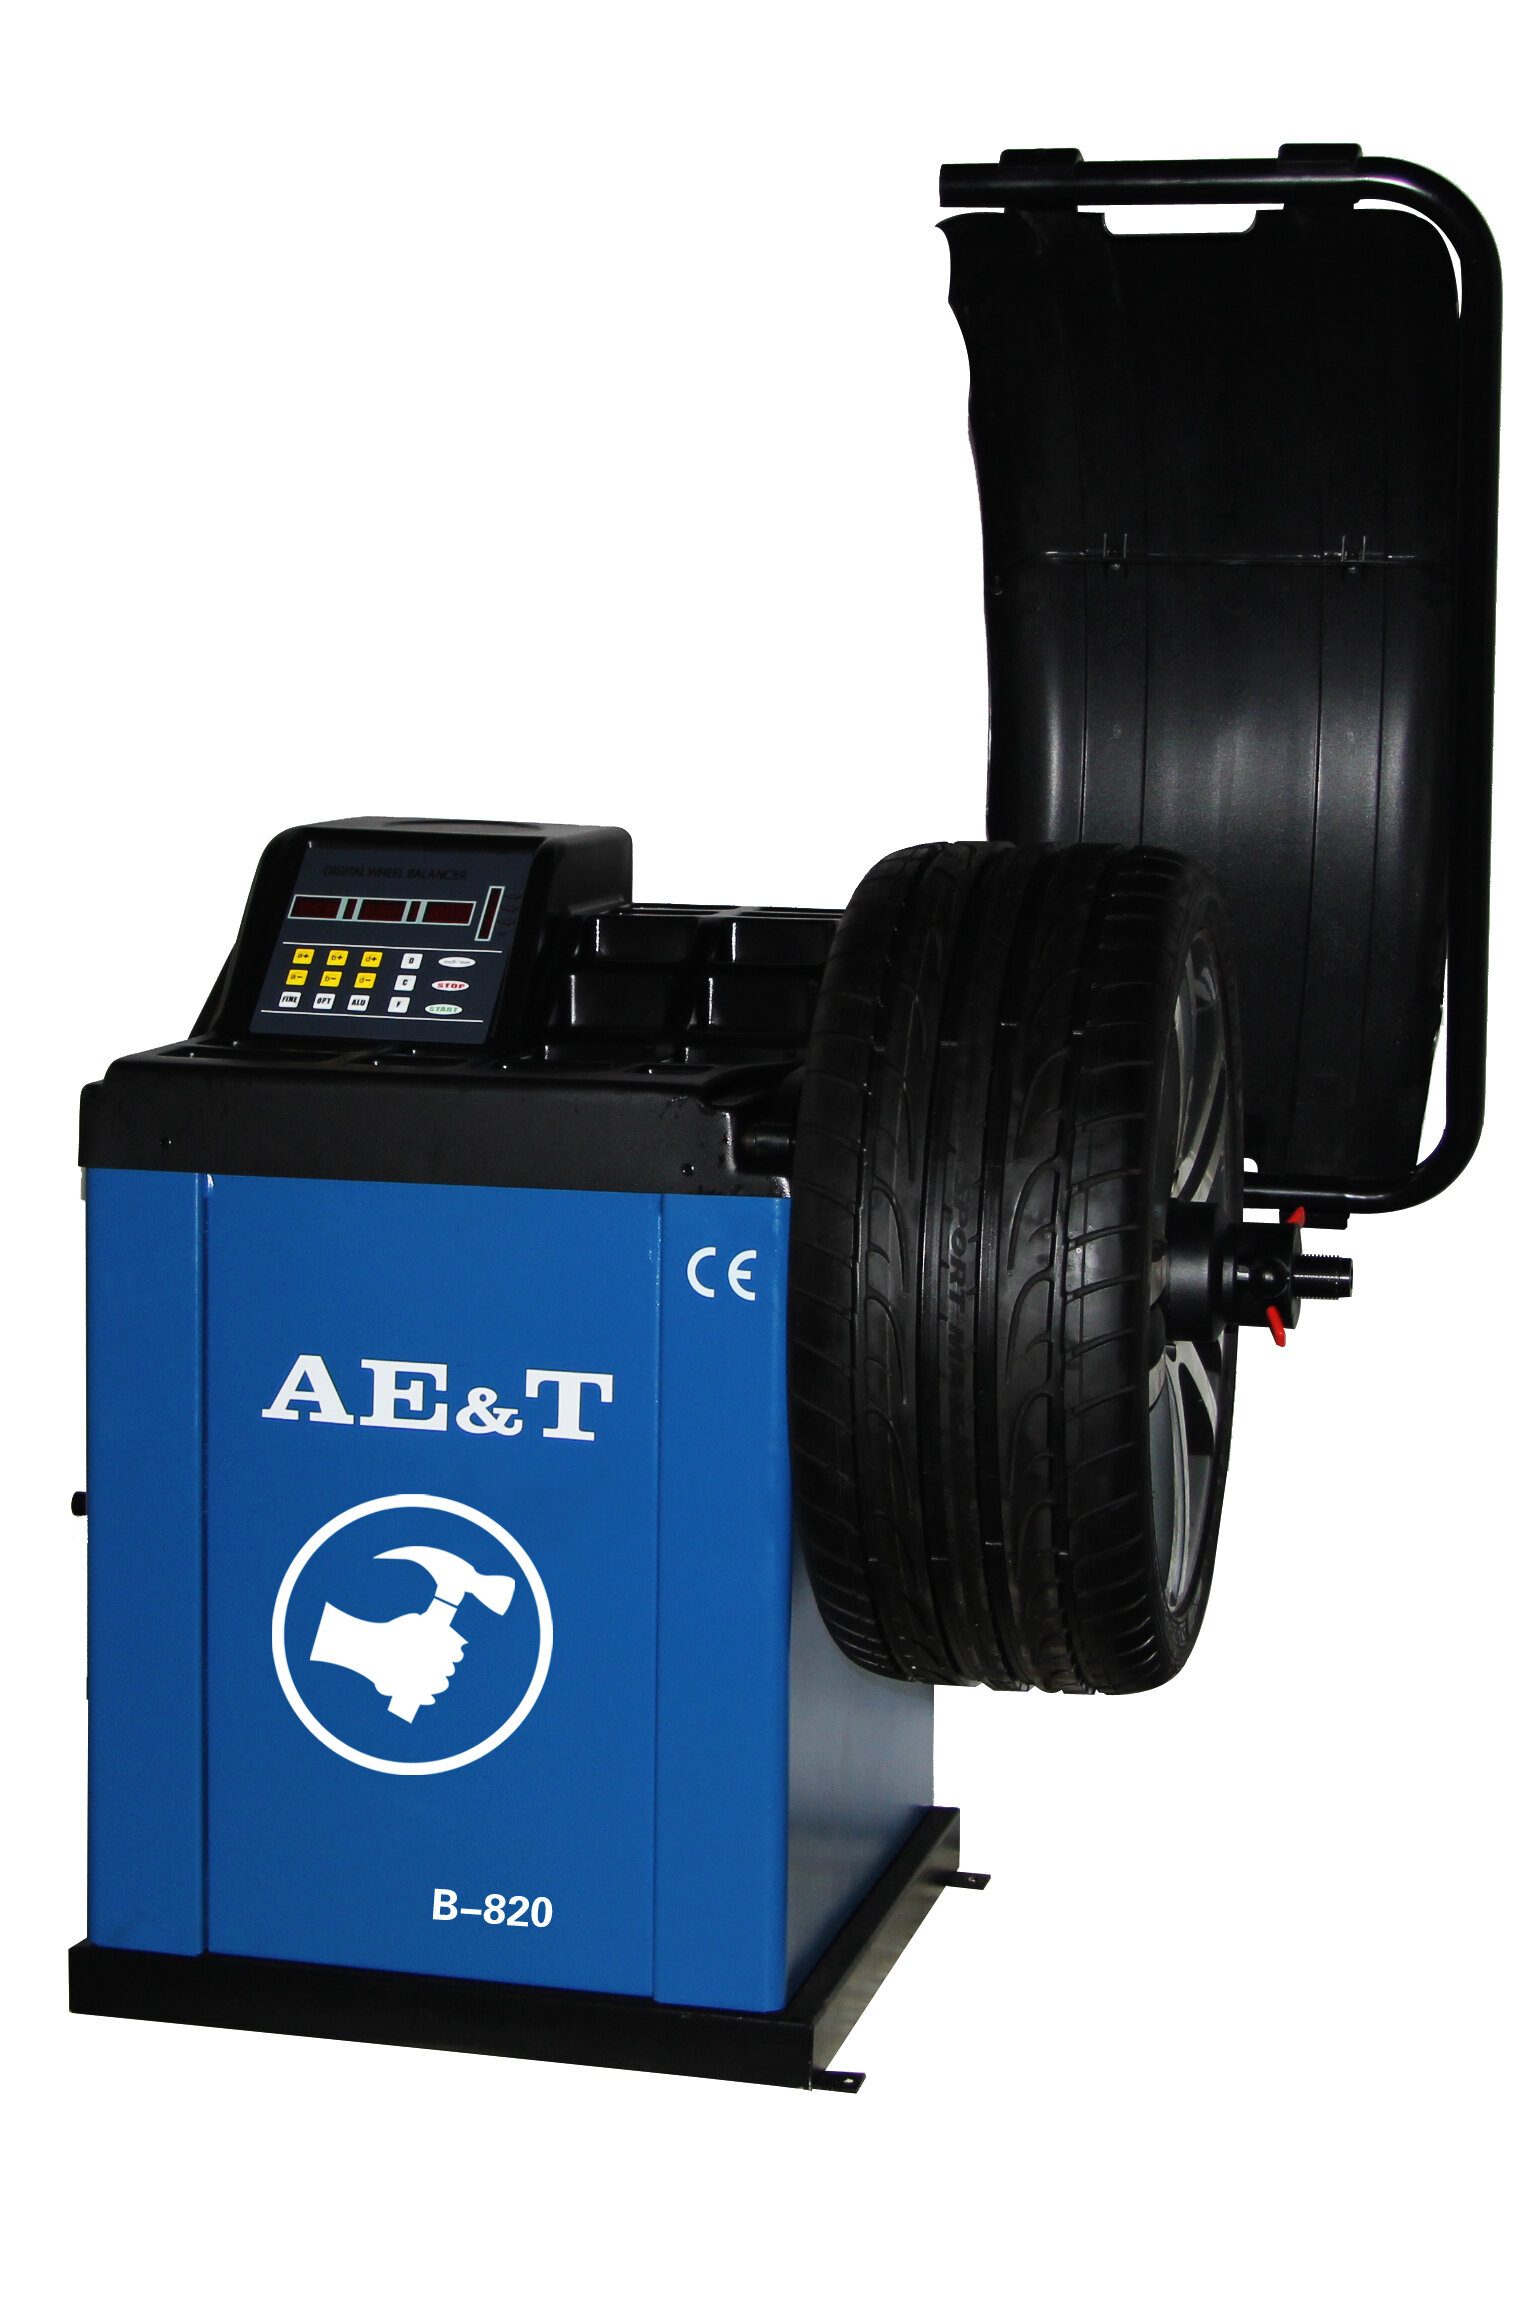 AET Балансировочный станок B-820 AET для колес легковых автомобилей 220В 254-610 мм (10-24”) 65 960 мм (38”) 36 40-510 мм (1,5-20”) 200 960х760х1160мм 200 Вт легковой